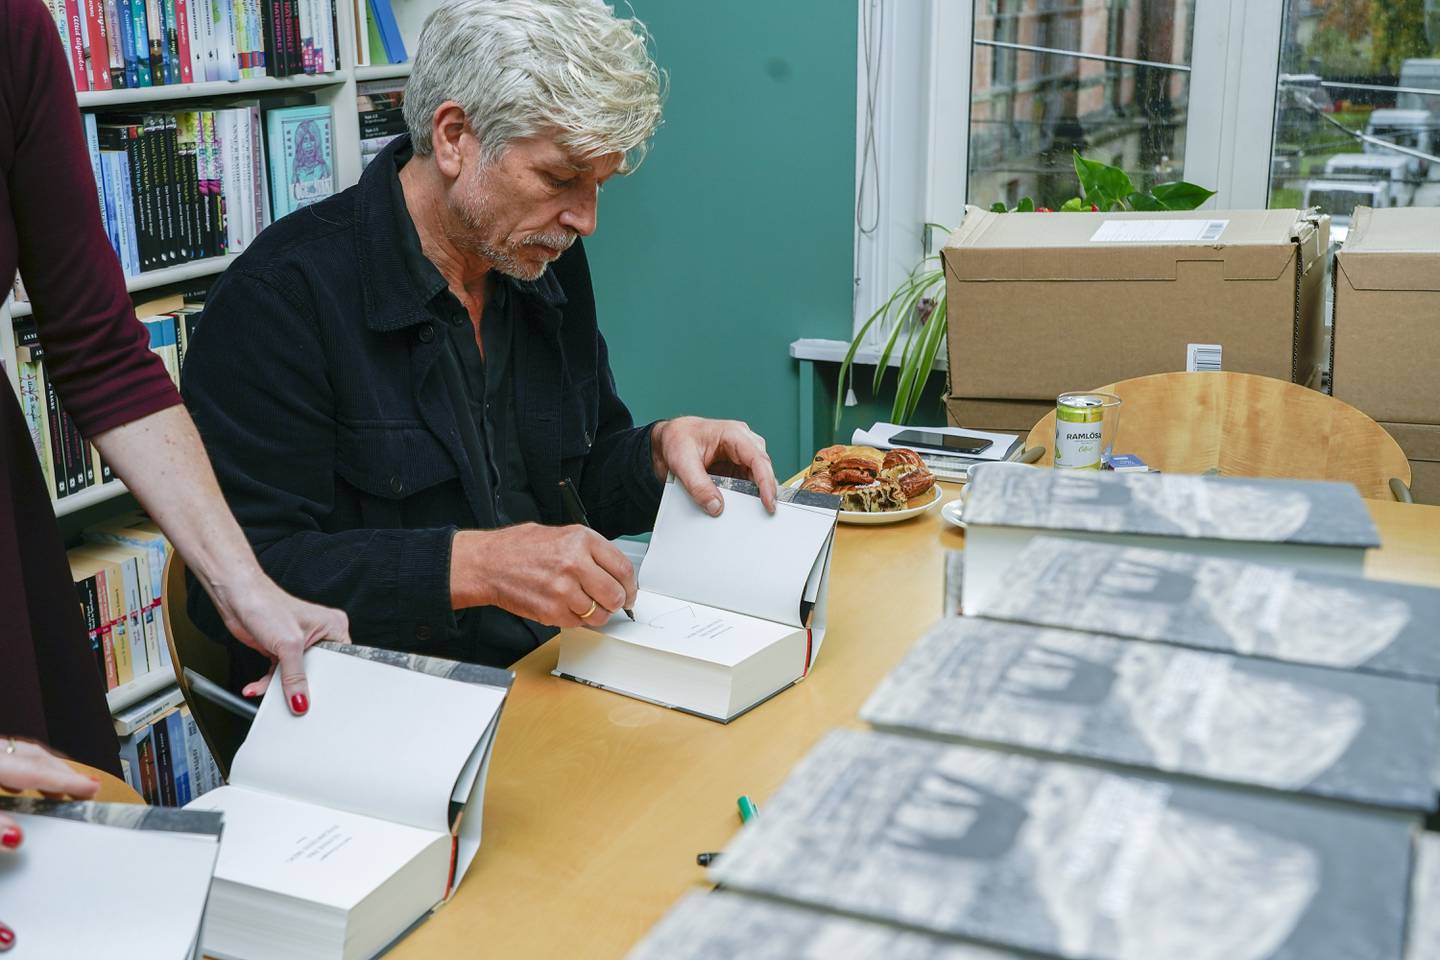 Boksignering er en del av en forfatters yrkesliv. Her er Karl Ove Knausgård i gang hos Forlaget Oktober. 
Foto: Terje Bendiksby / NTB